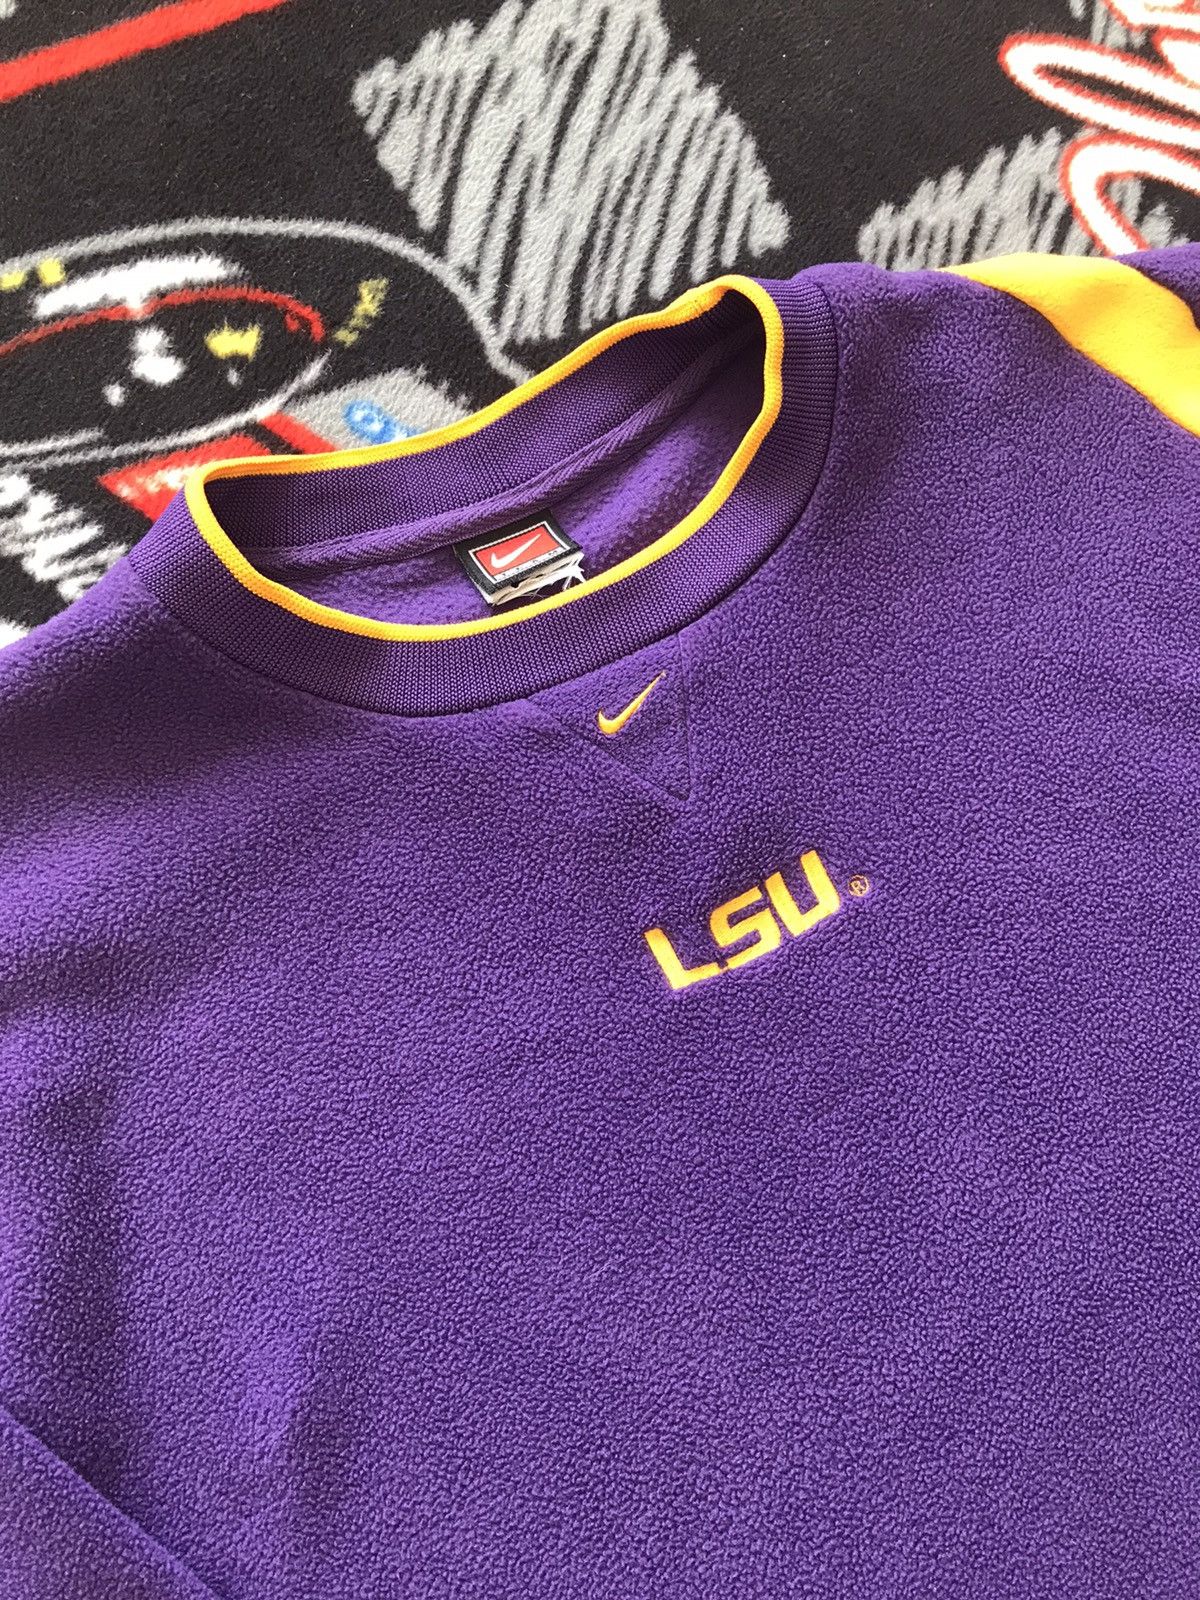 Nike Vintage LSU Tiger’s Nike Center Swoosh Sweatshirt Size US M / EU 48-50 / 2 - 2 Preview